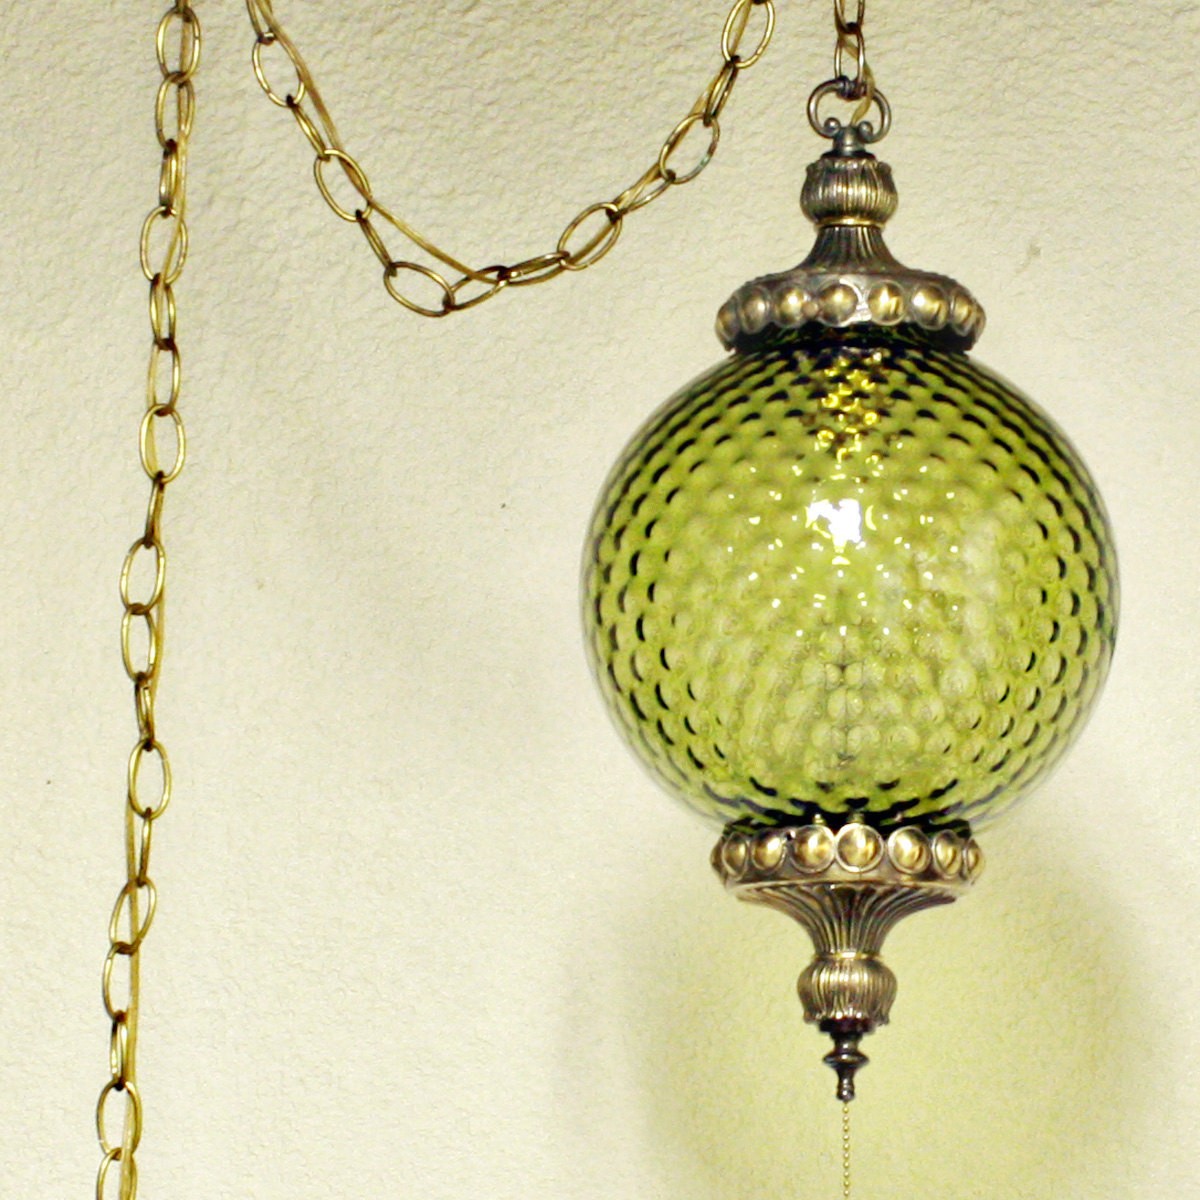 Vintage hanging light hanging lamp green globe chain 3